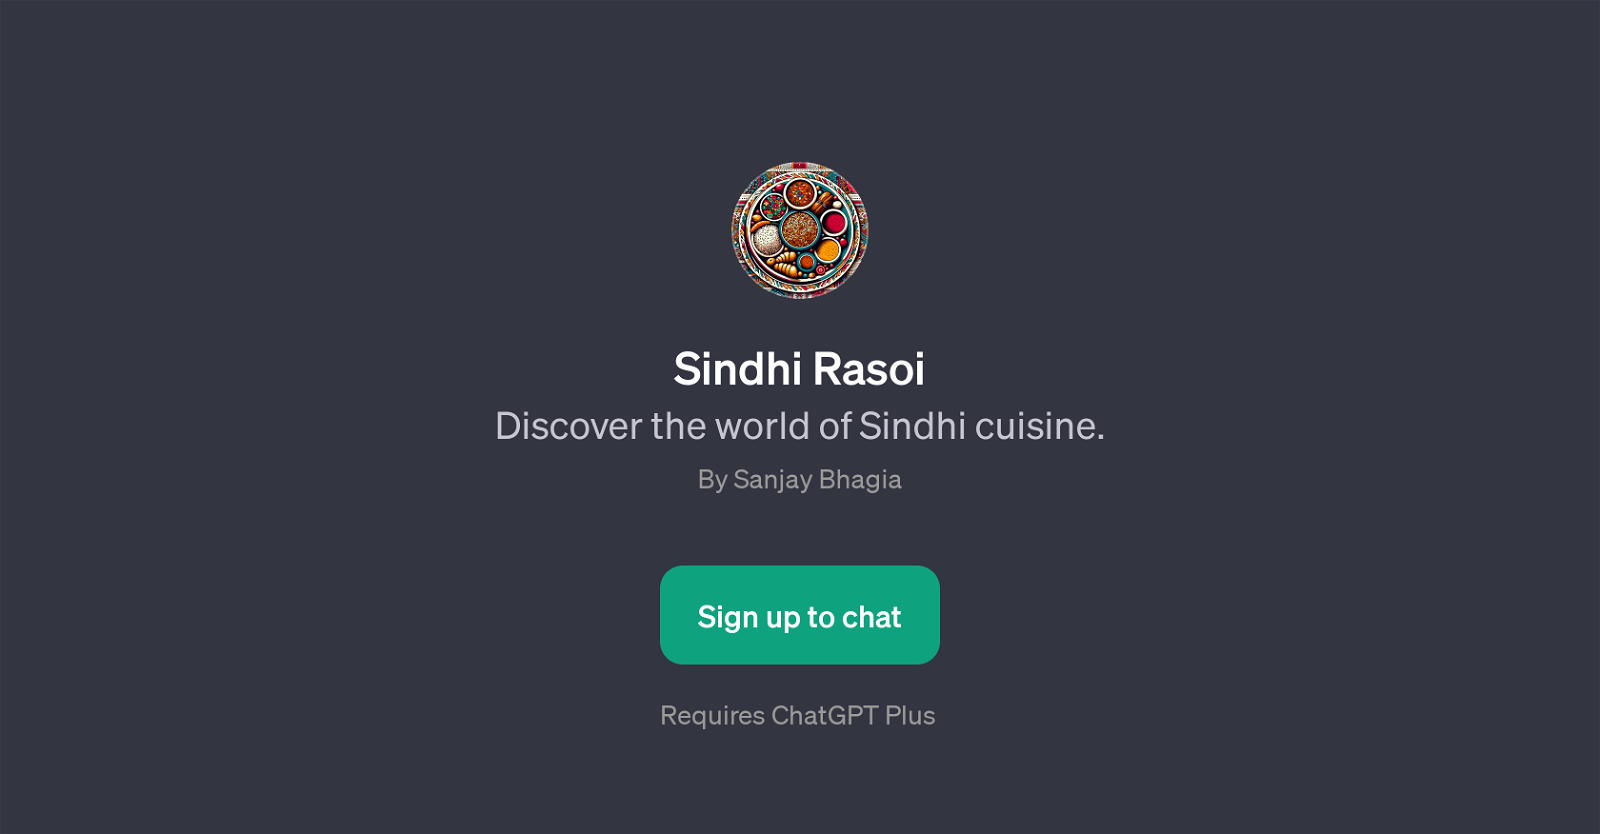 Sindhi Rasoi website